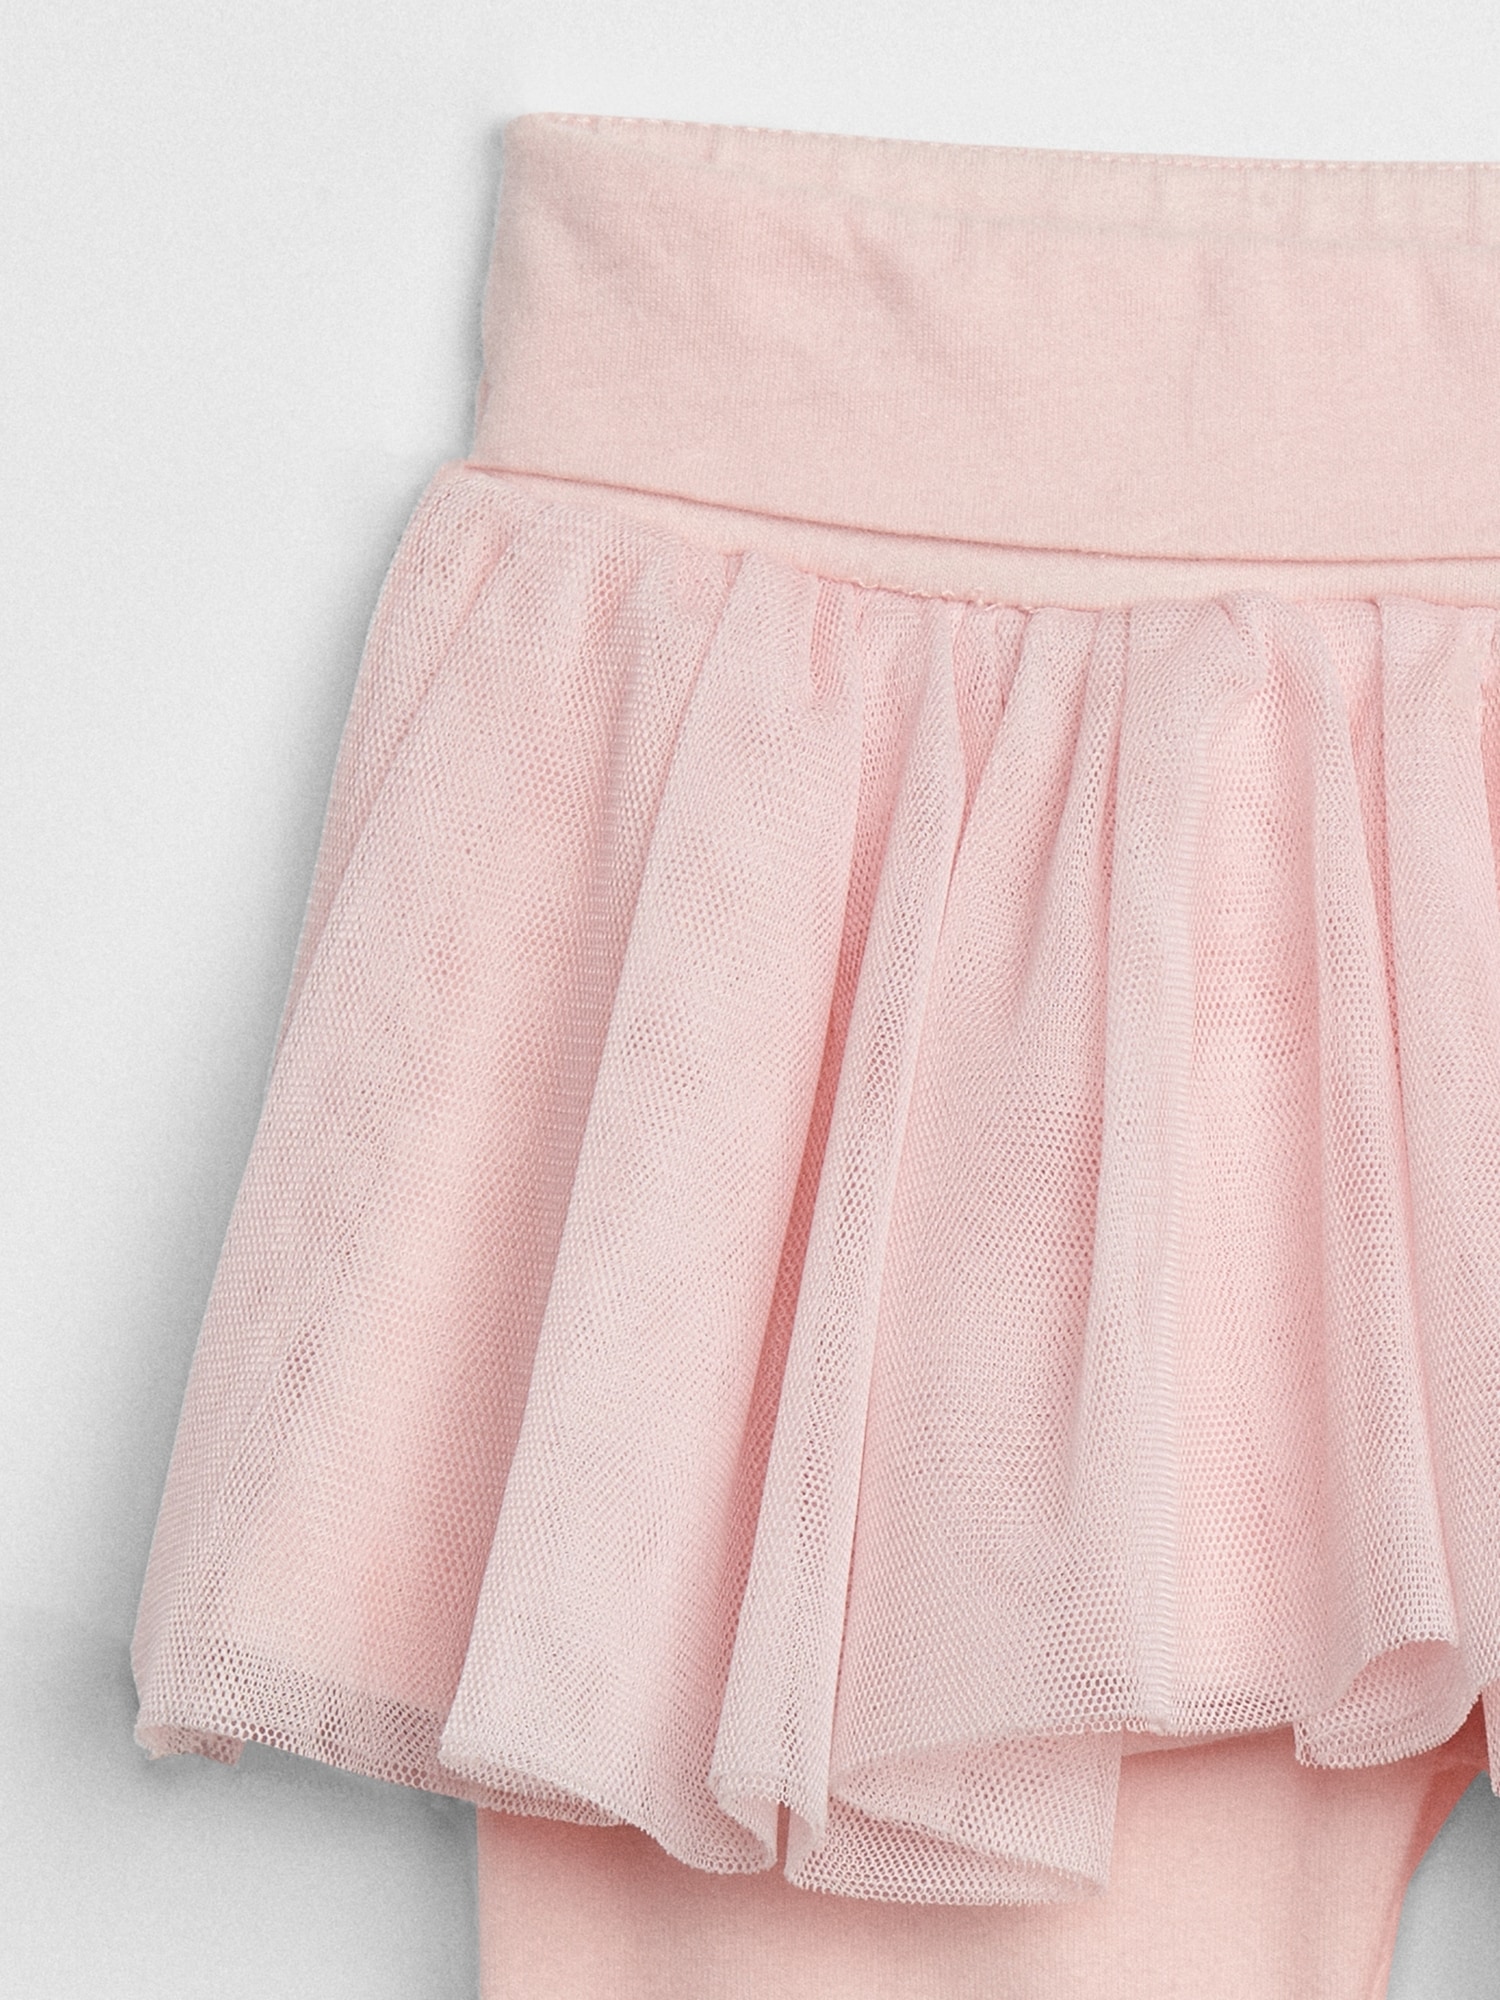 Baby Leggings With Tulle Skirt Trim | Gap